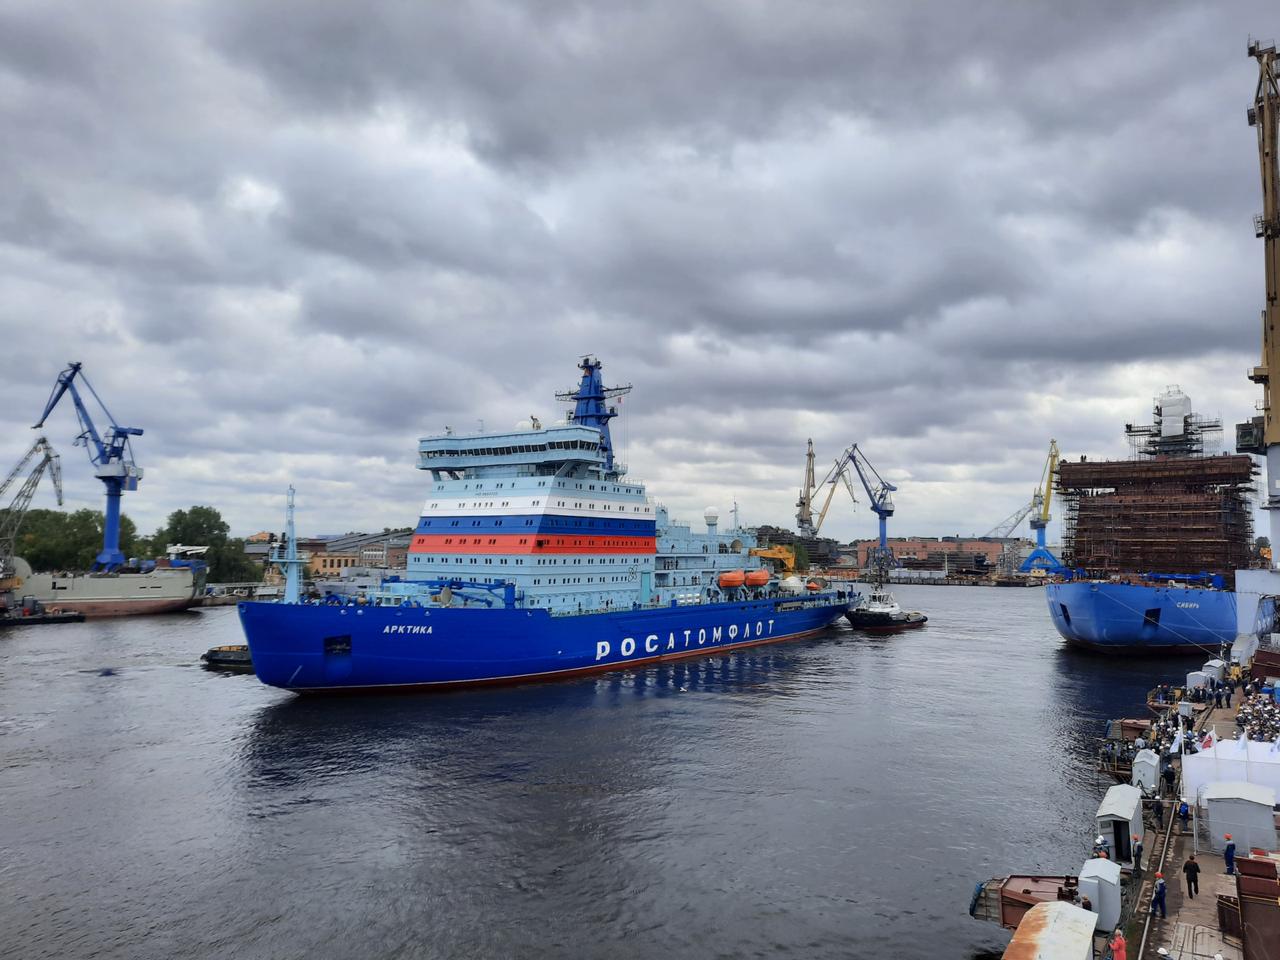 “Arktika” nuclear icebreaker arrived at its port of registry in Murmansk